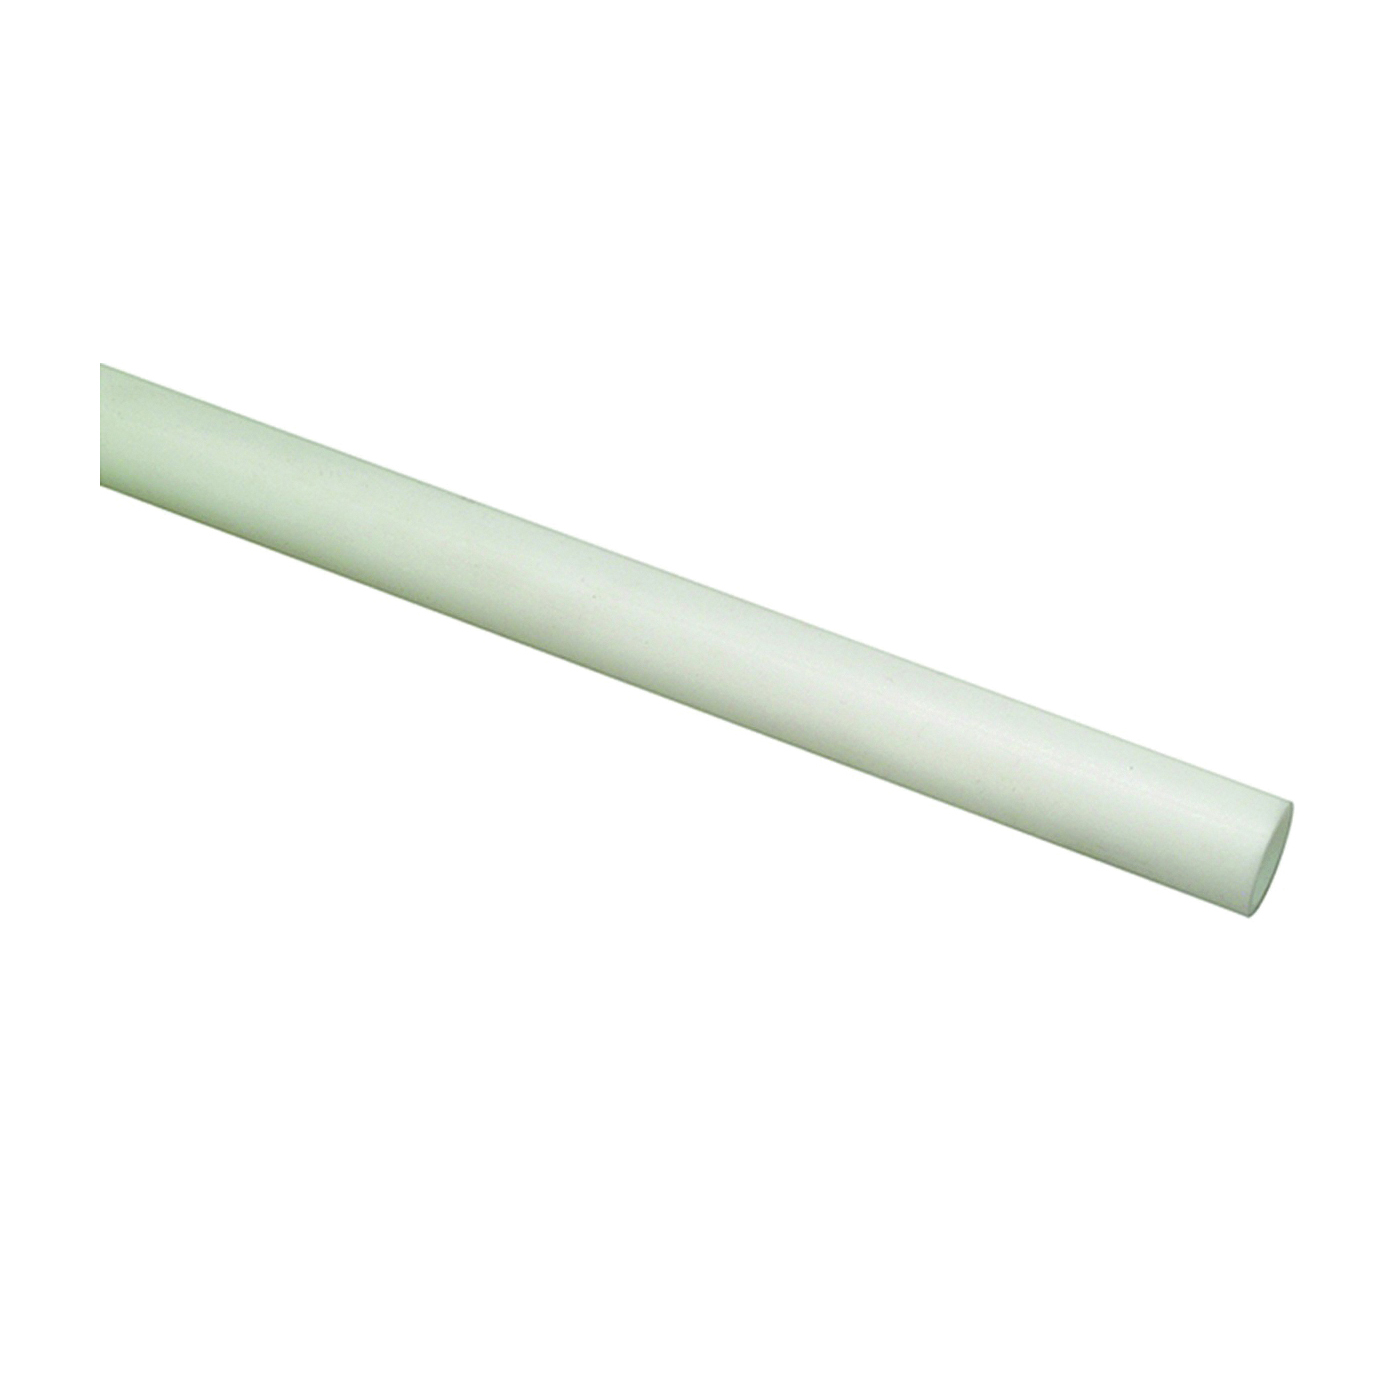 APPW538 PEX-B Pipe Tubing, 3/8 in, White, 5 ft L